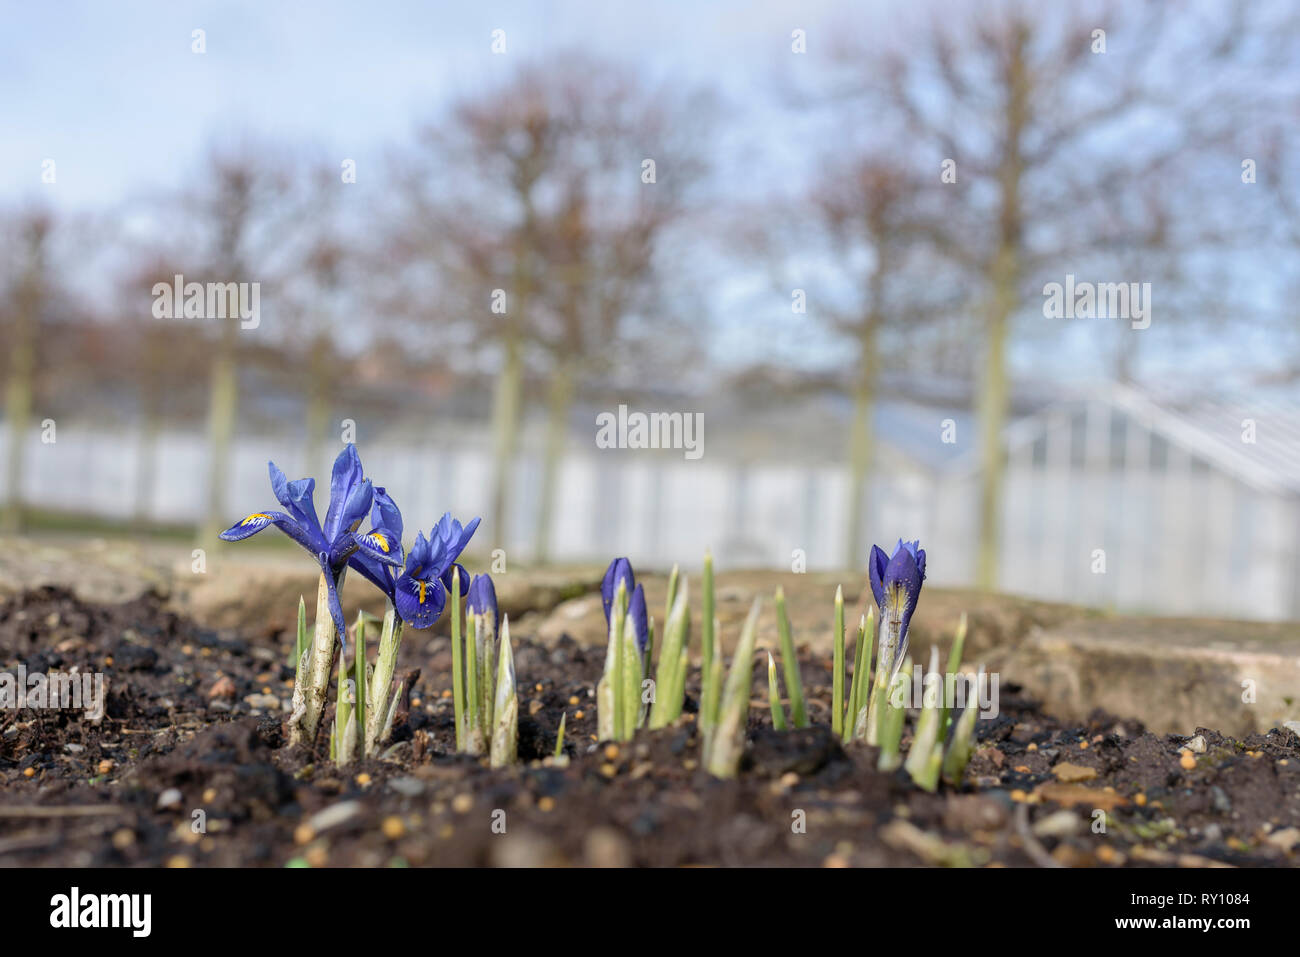 L'hiver, iris iris iris Harput, Orchis, jardin botanique, Bosestrasse, Kassel, Allemagne, (Iris histrioides) Banque D'Images